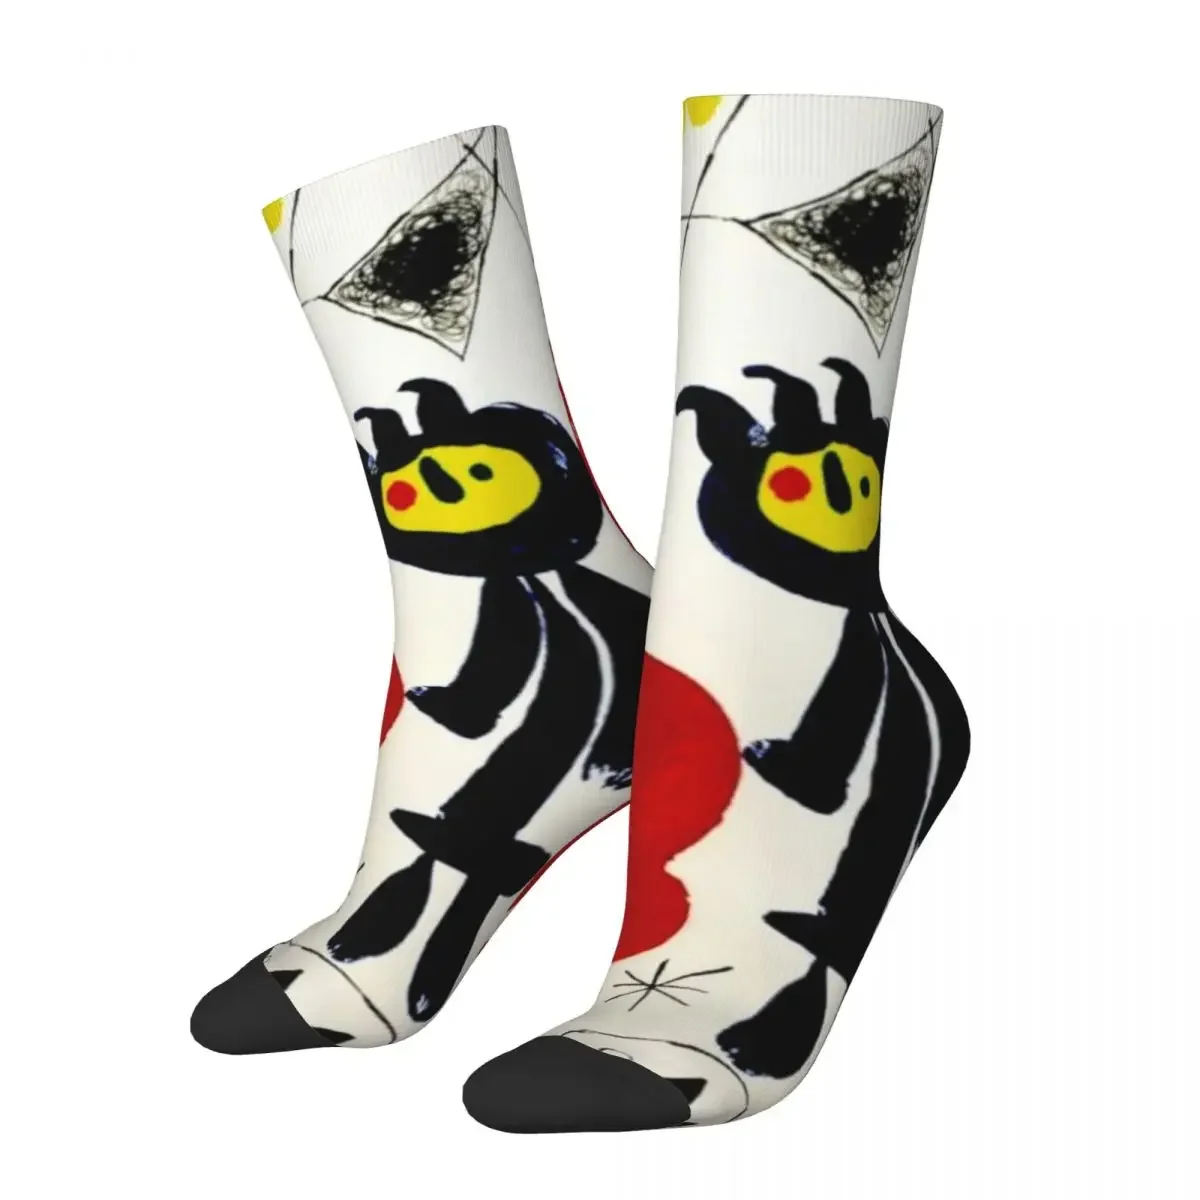 

Joan Miro Abstract Surrealism Socks Harajuku High Quality Stockings All Season Long Socks Accessories for Unisex Gifts